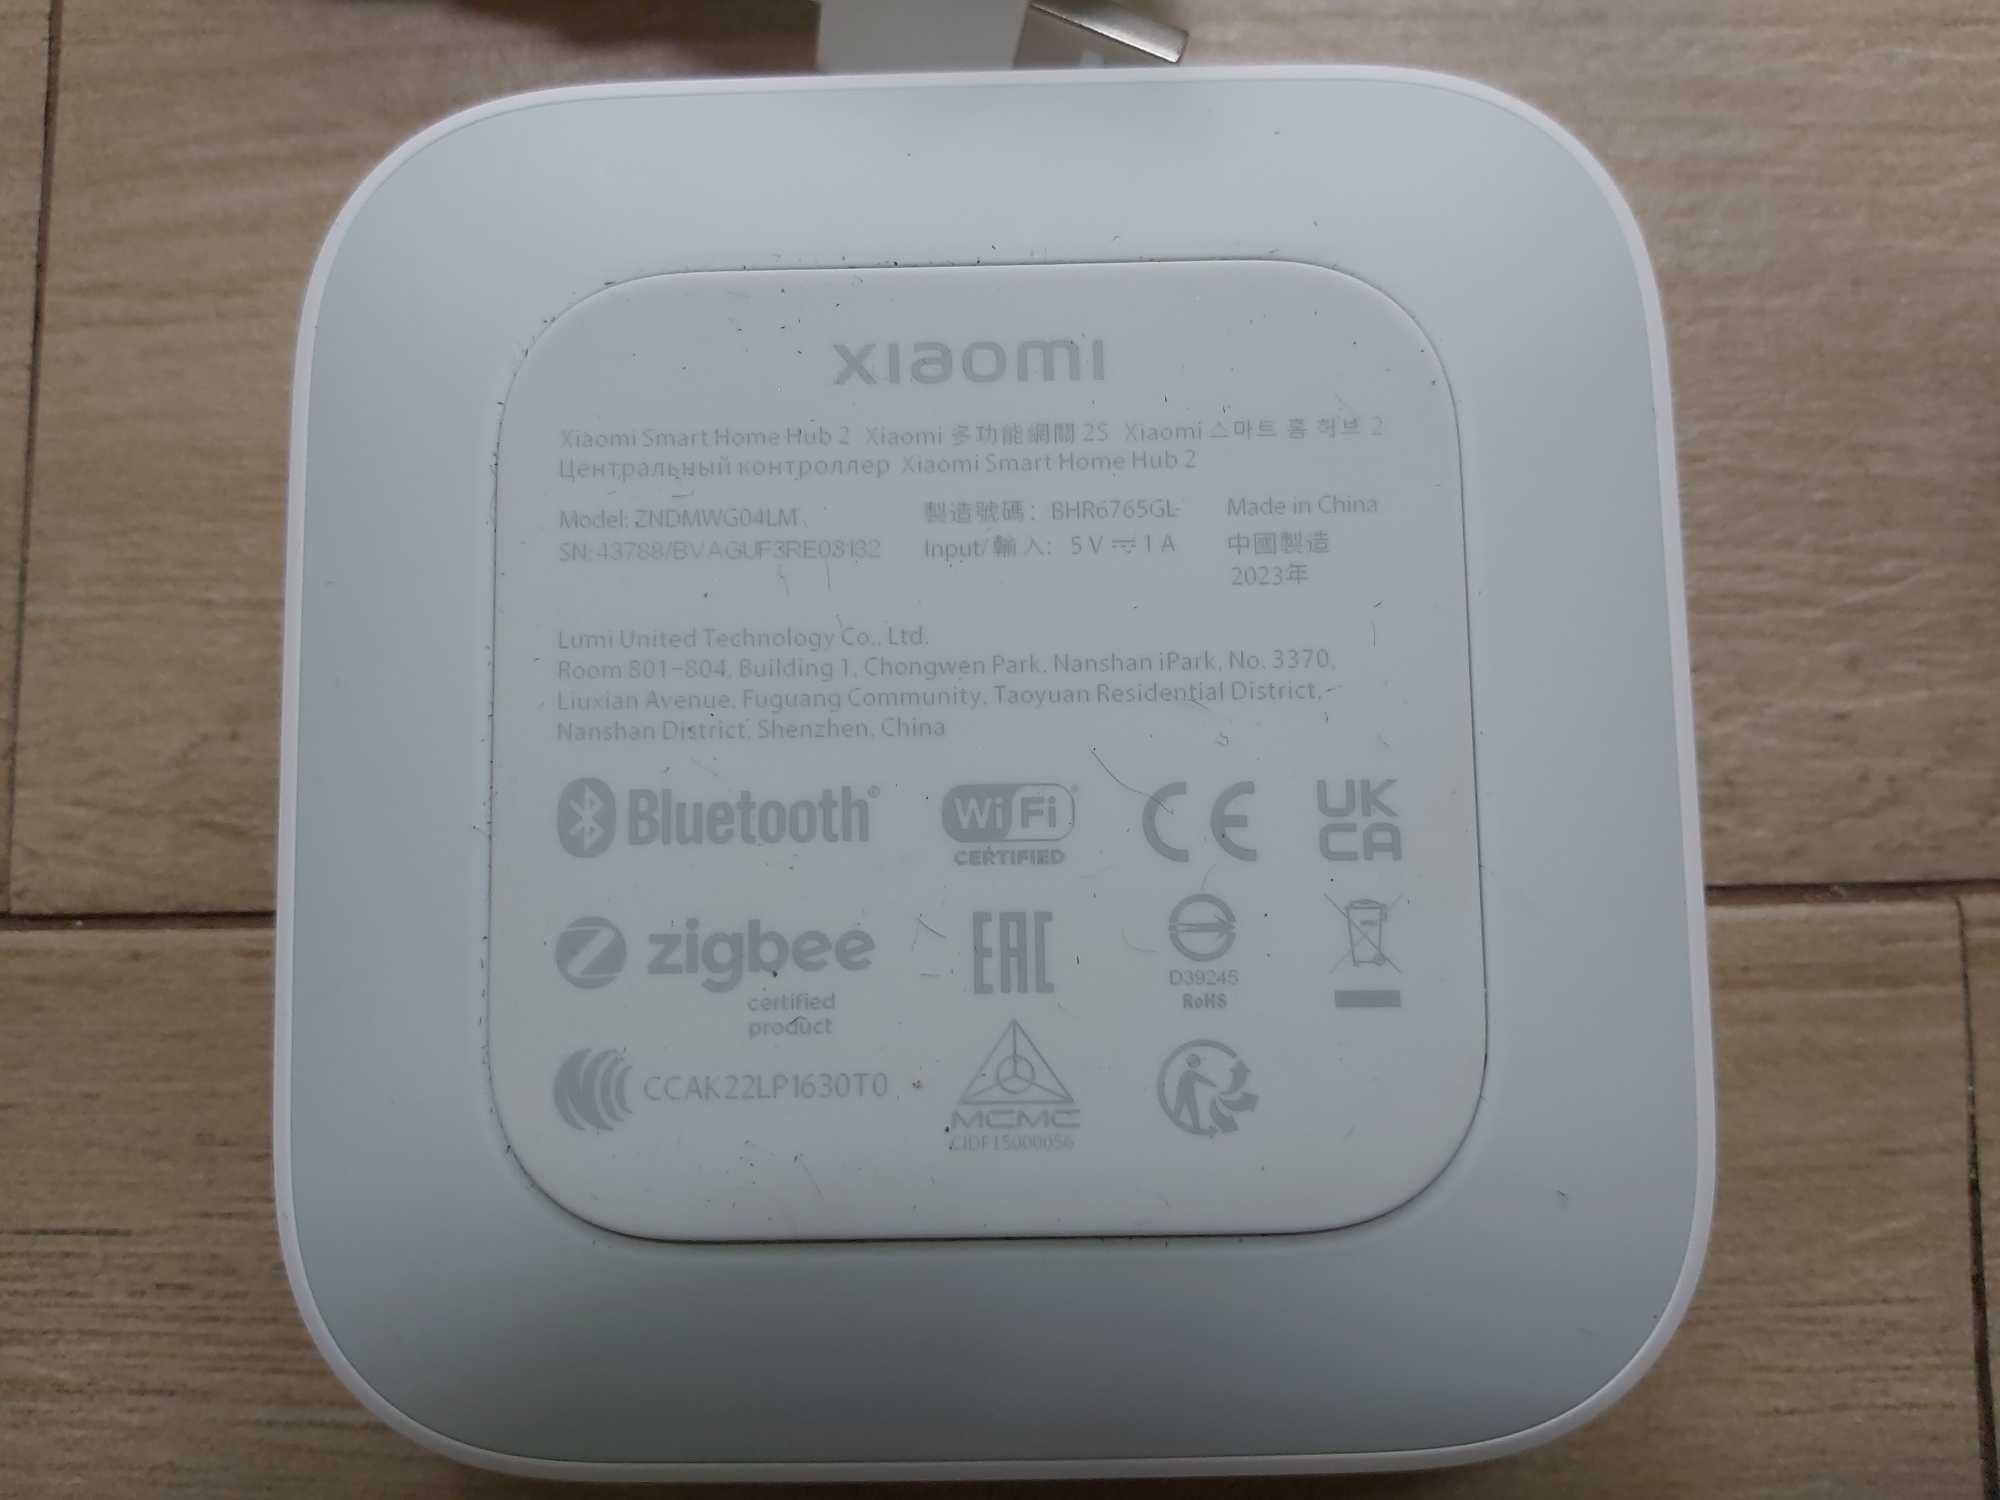 Xiaomi Smart Home Hub 2 ZNDMWG04LM